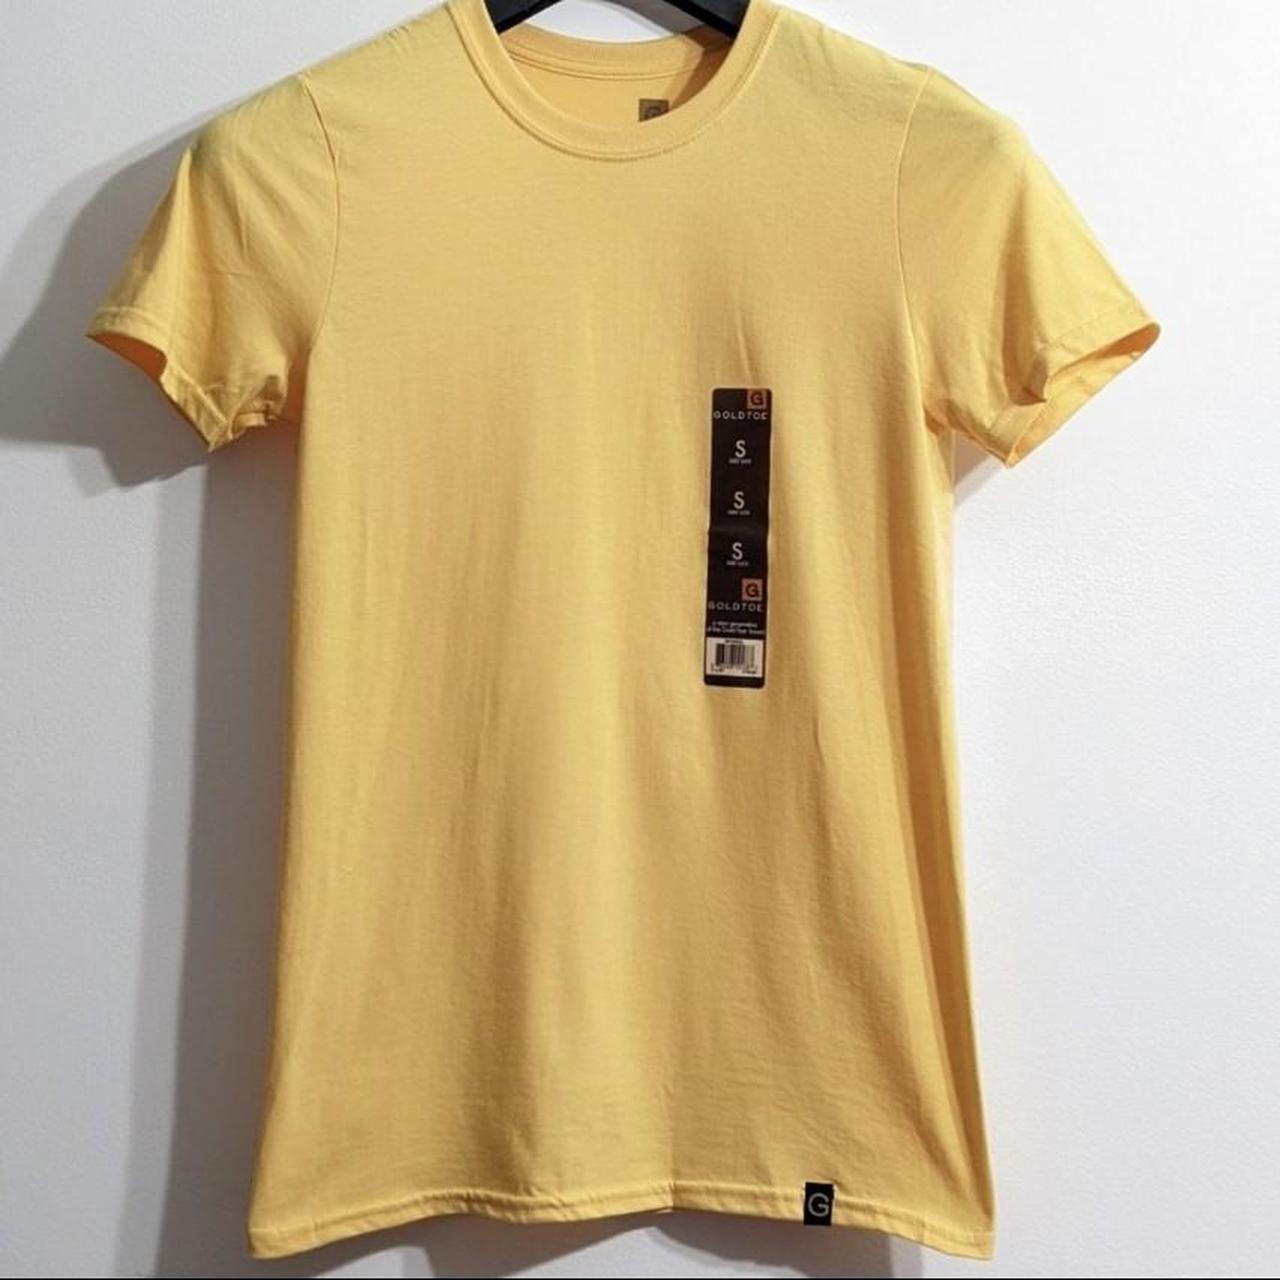 Gold Toe Men's Yellow T-shirt